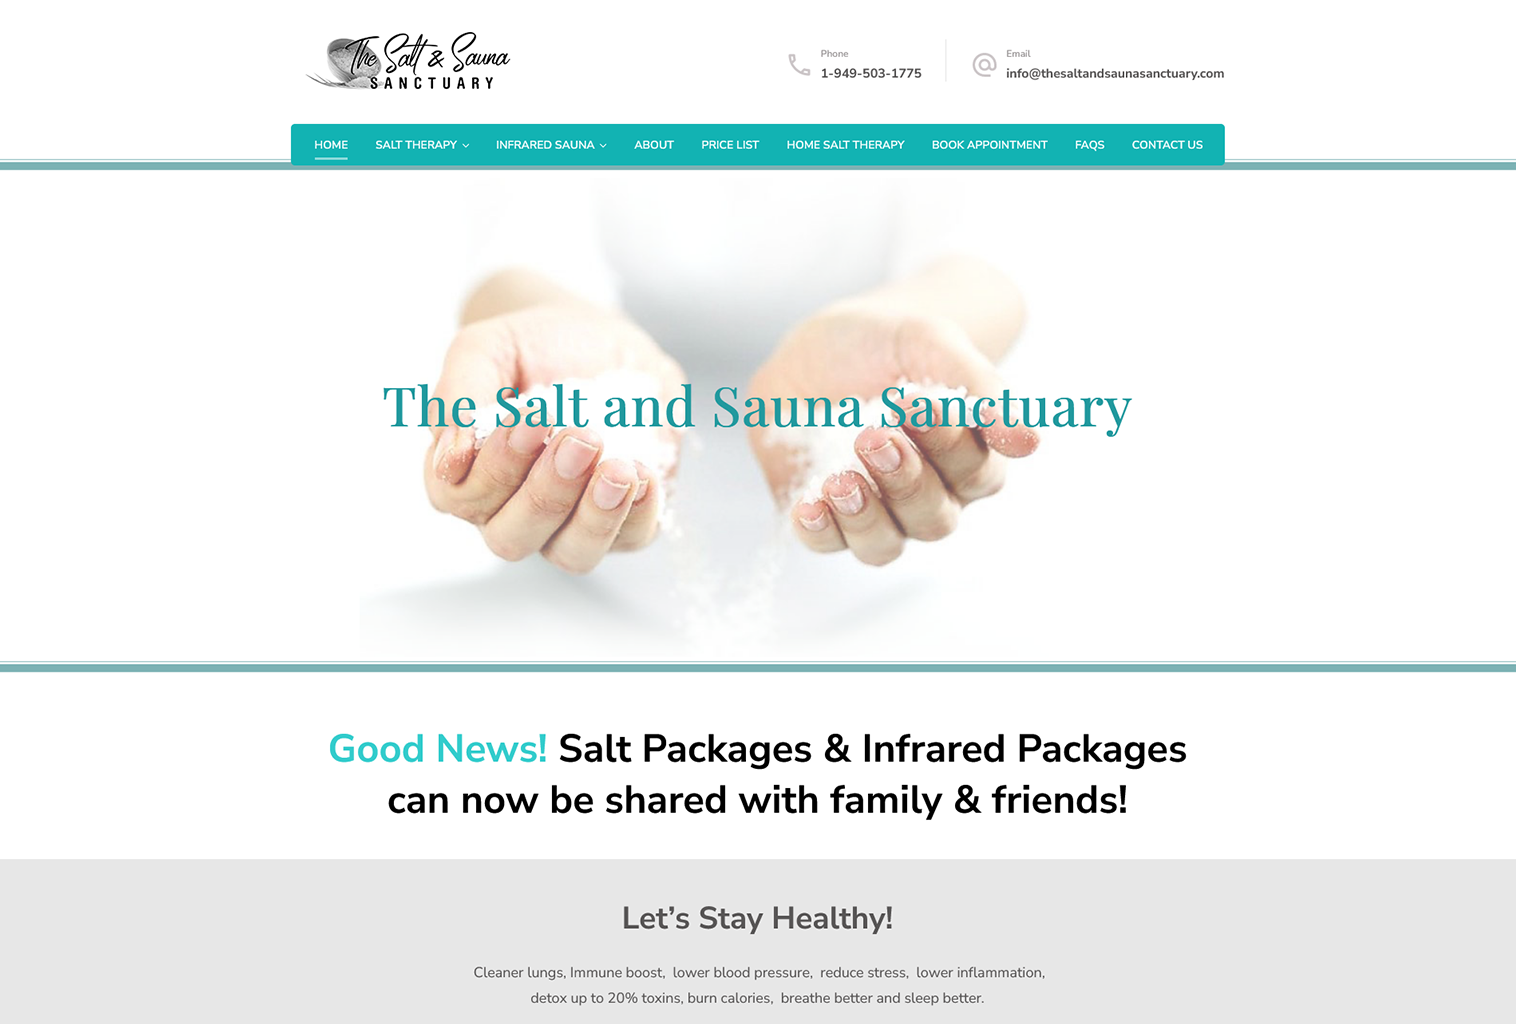 The Salt and Sauna Sanctuary